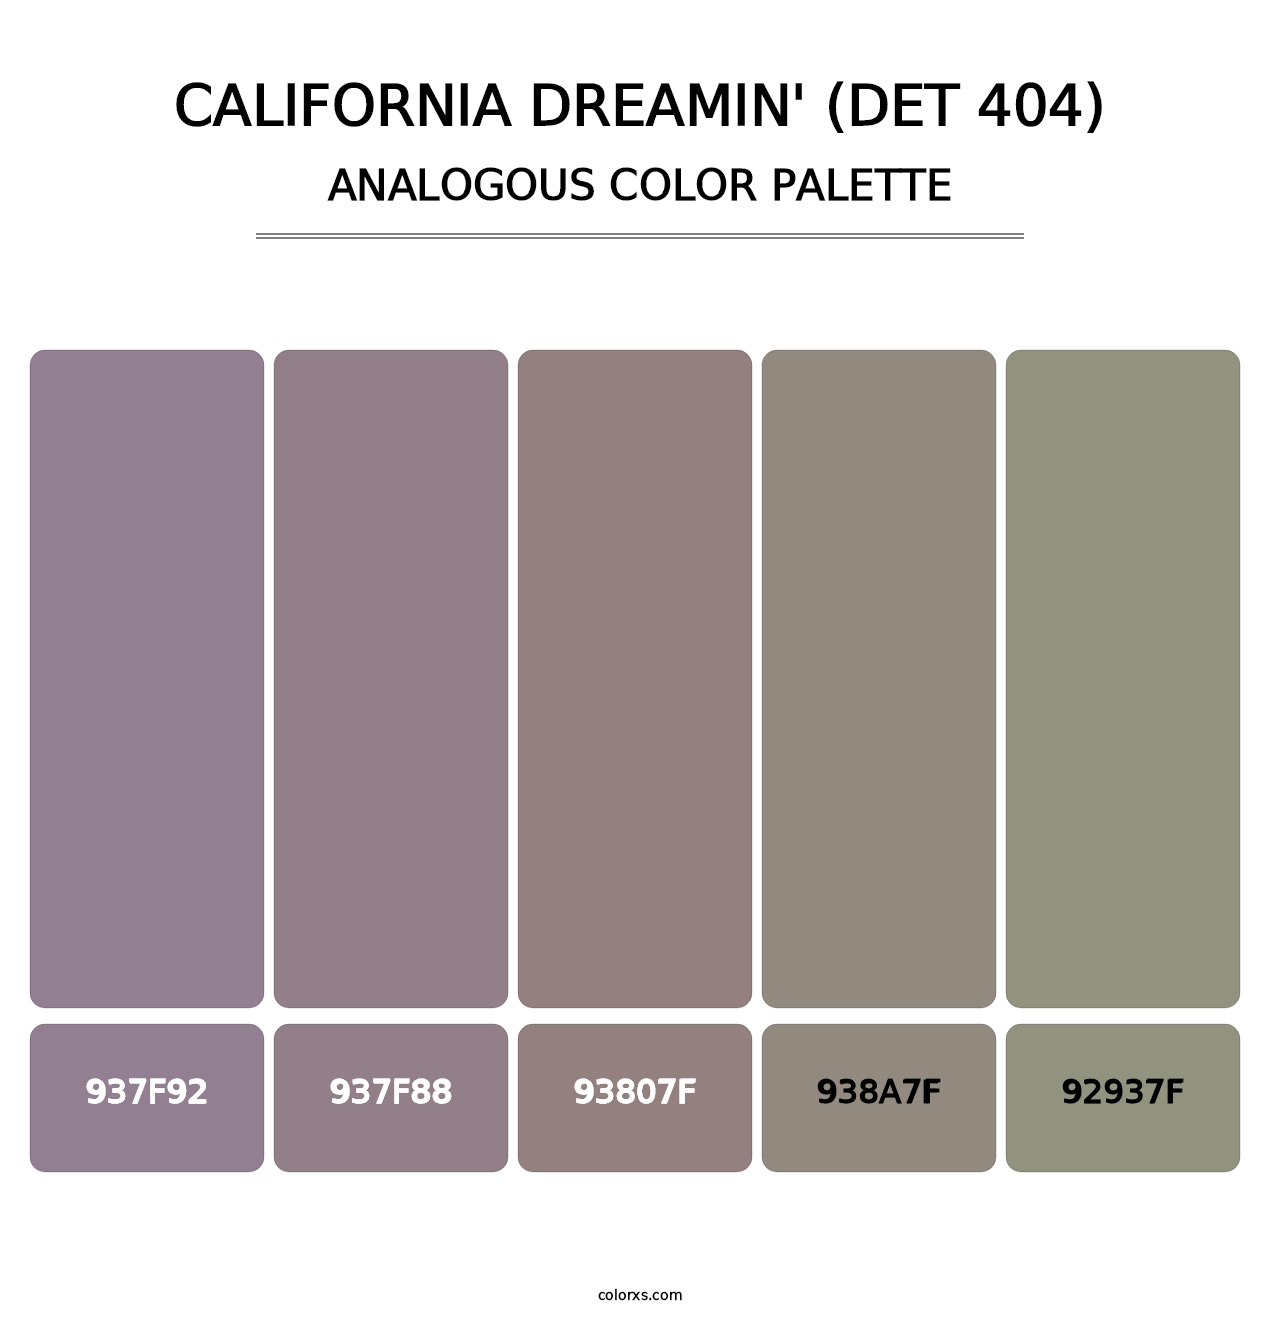 California Dreamin' (DET 404) - Analogous Color Palette